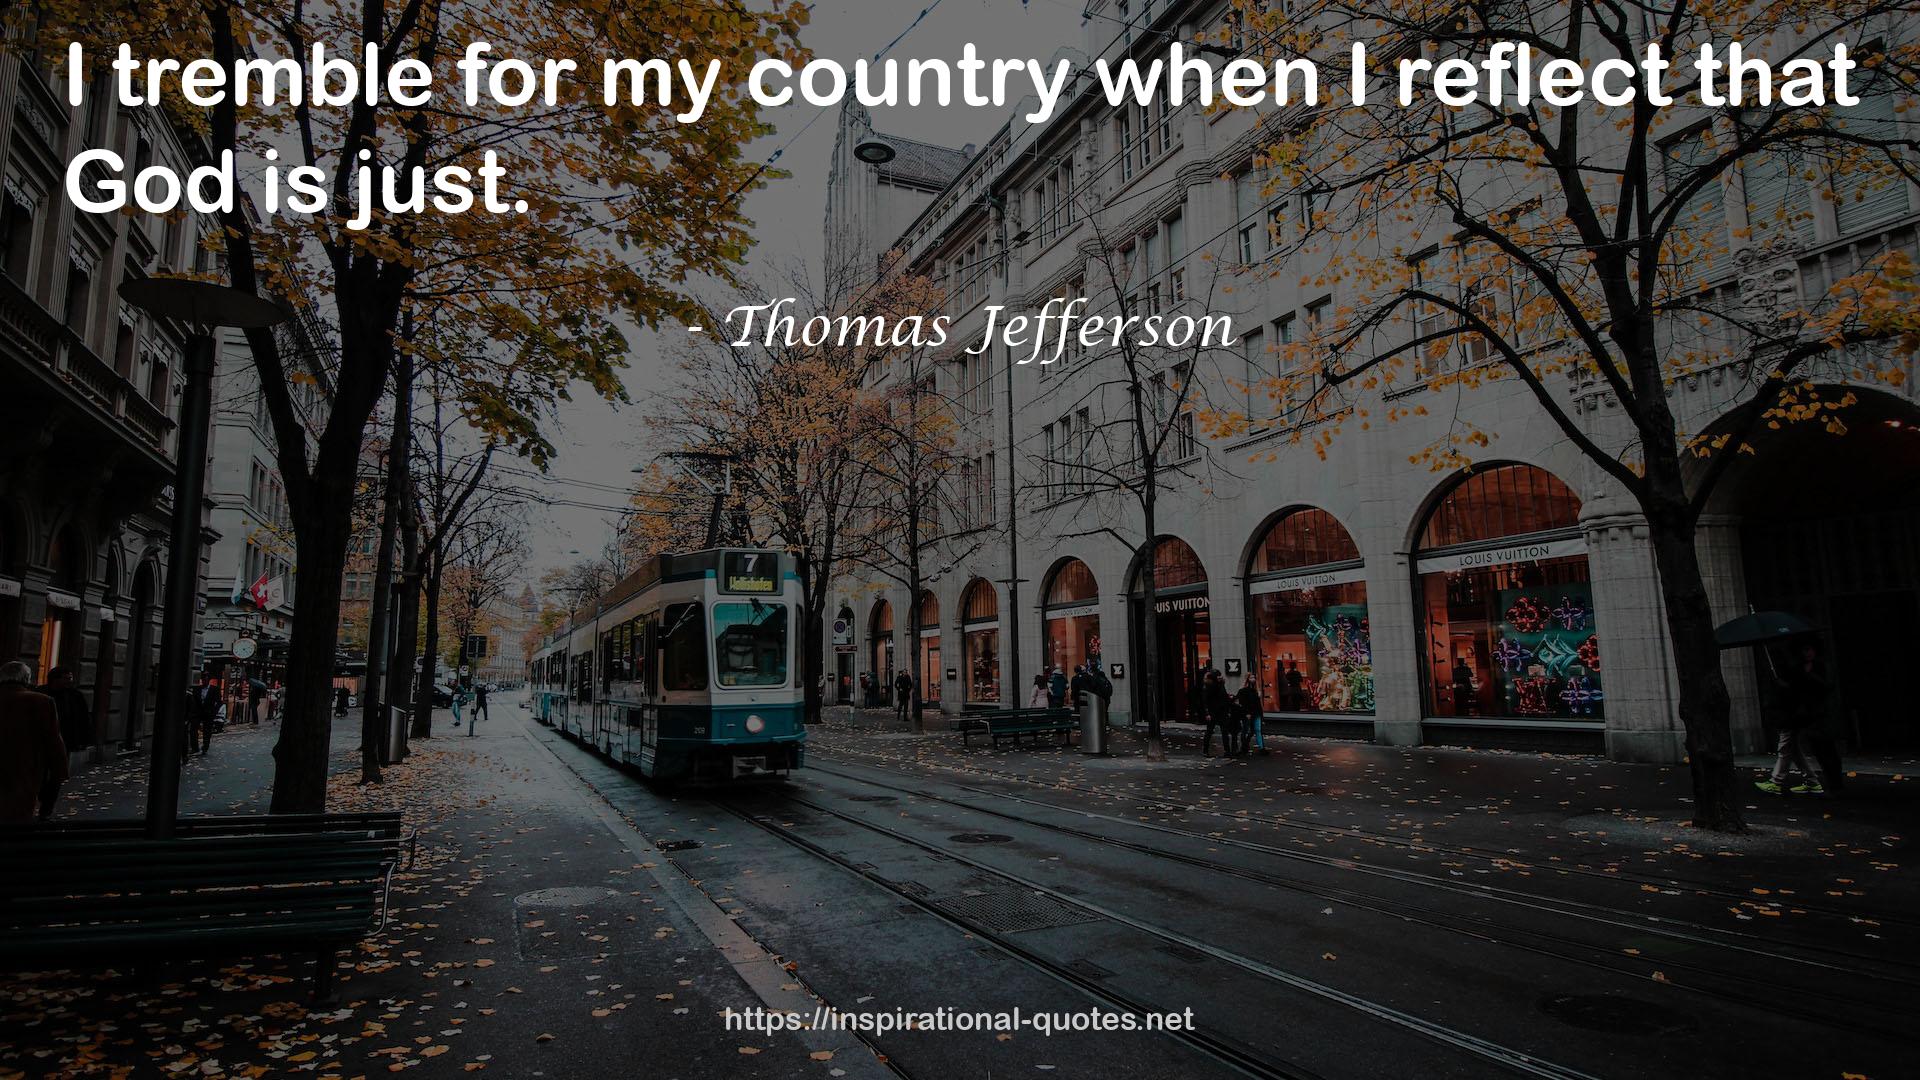 Thomas Jefferson QUOTES